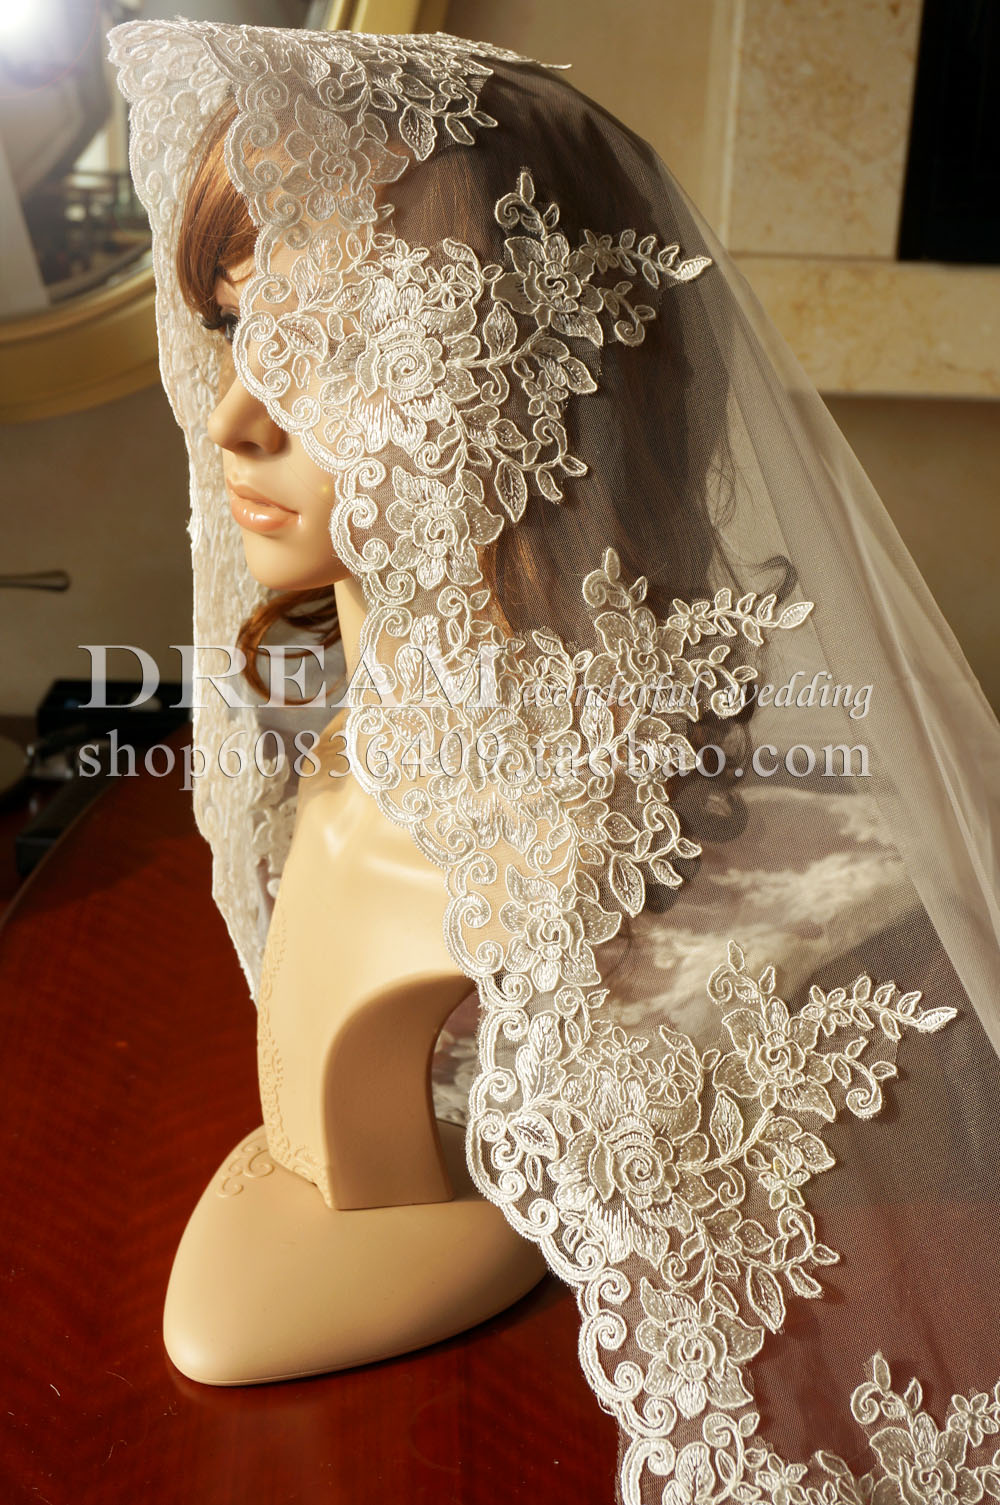 Bridal veil wedding dress veil hair accessory accessories fashion big laciness lace train veil